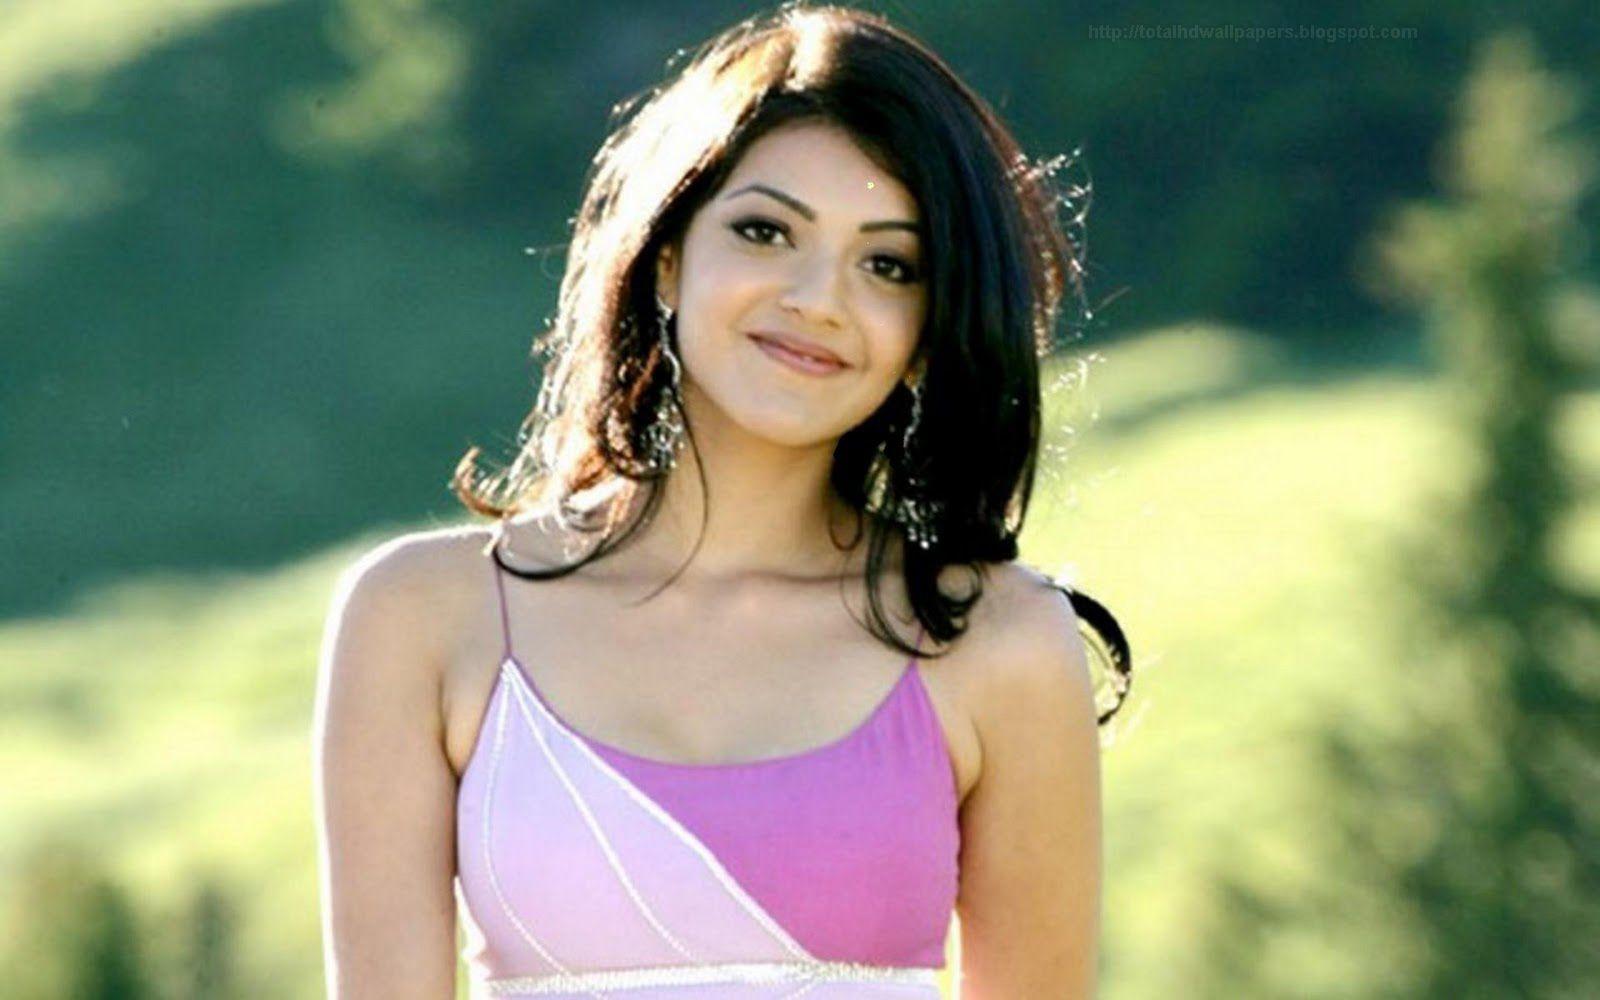 Indian Actresses HD Wallpapers - Top Free Indian Actresses ...